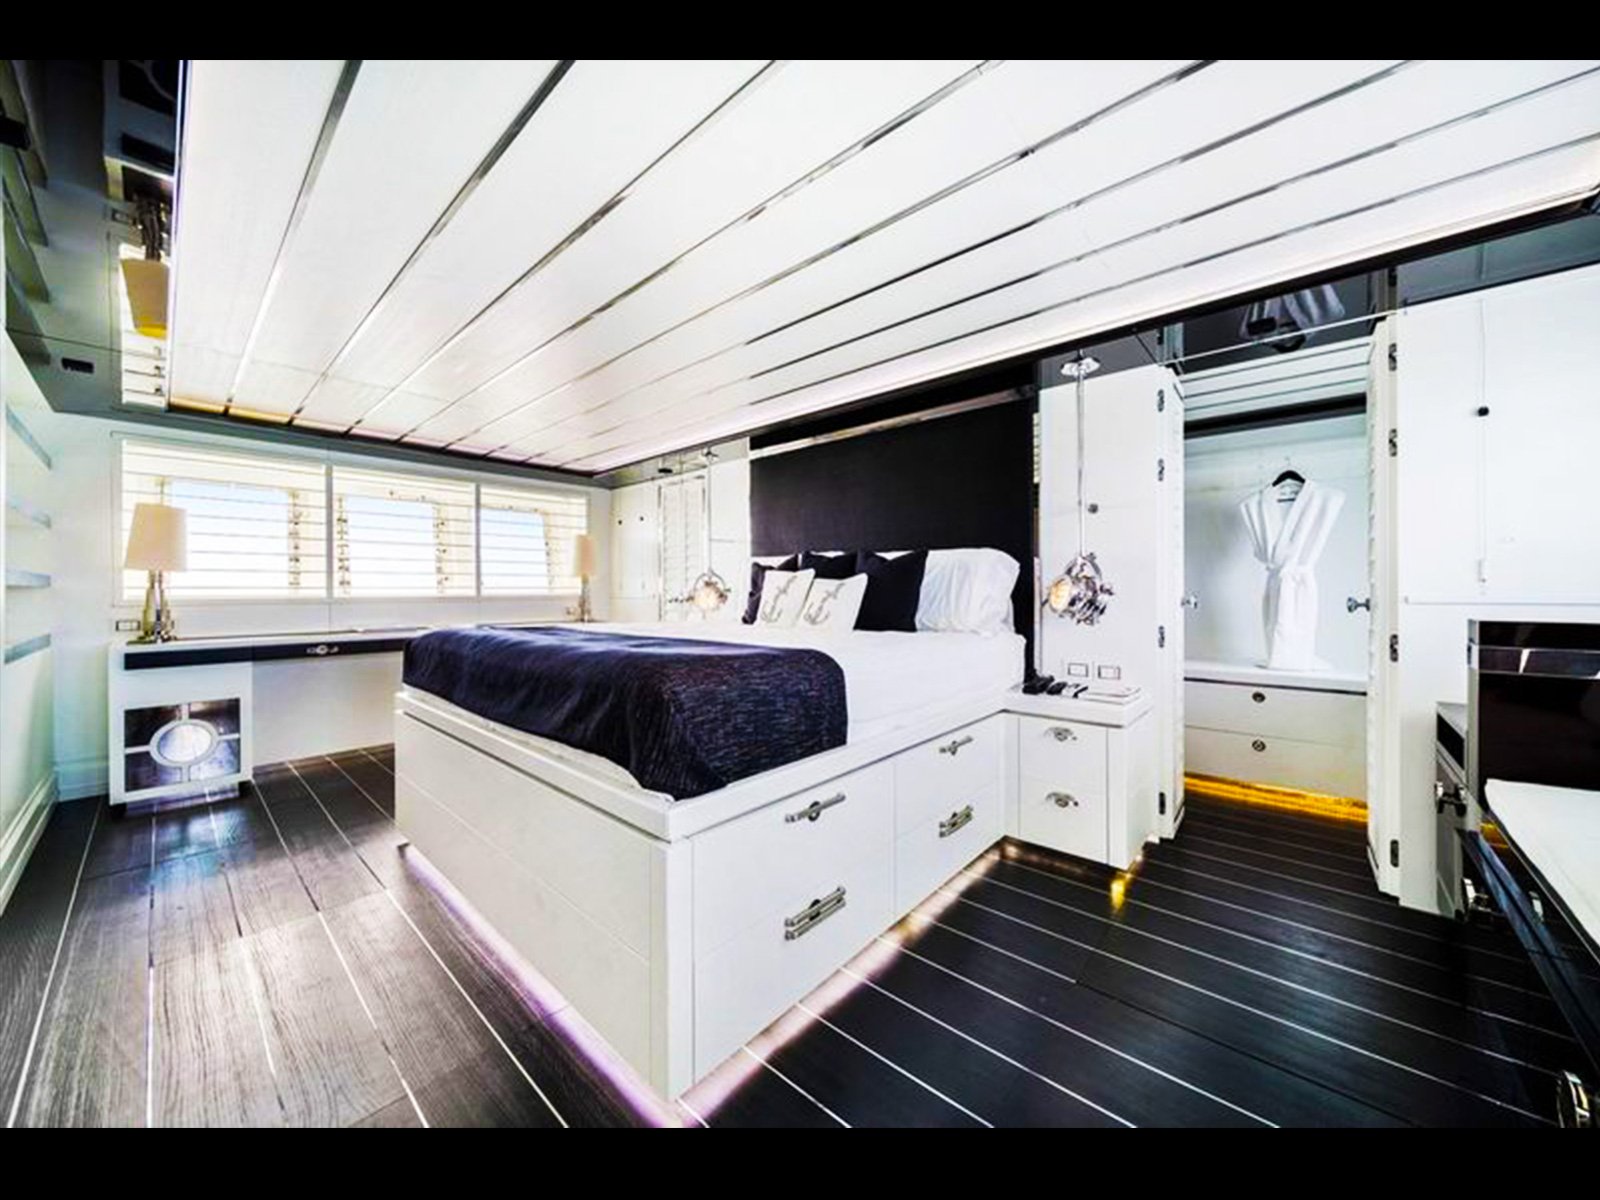 120-Technomar-miami-coast yachts14.jpg